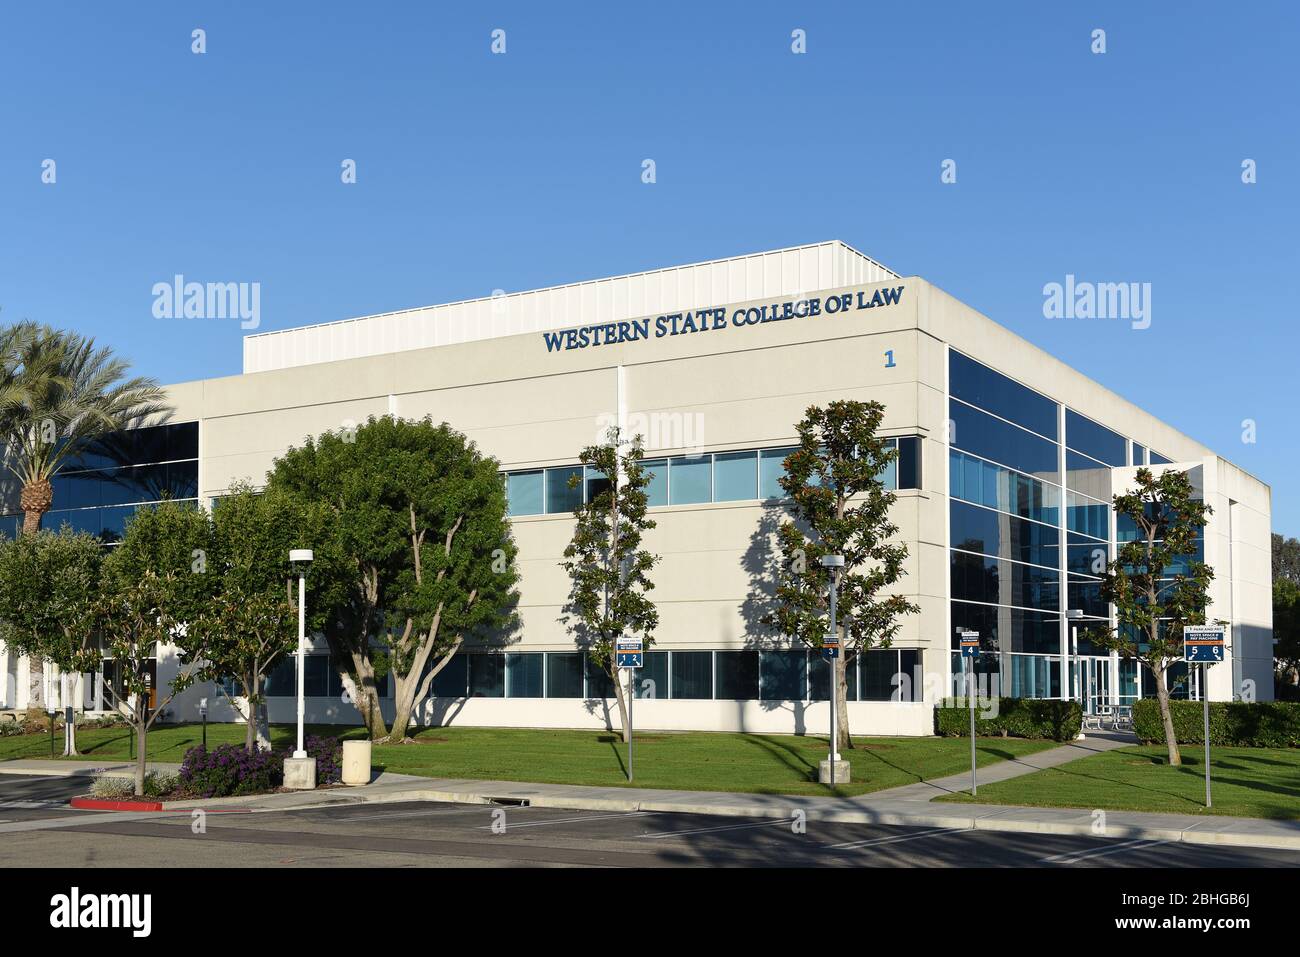 IRVINE, CALIFORNIE - 25 AVRIL 2020:The Western State College of Law, bâtiment de campus d'Irvine. Banque D'Images